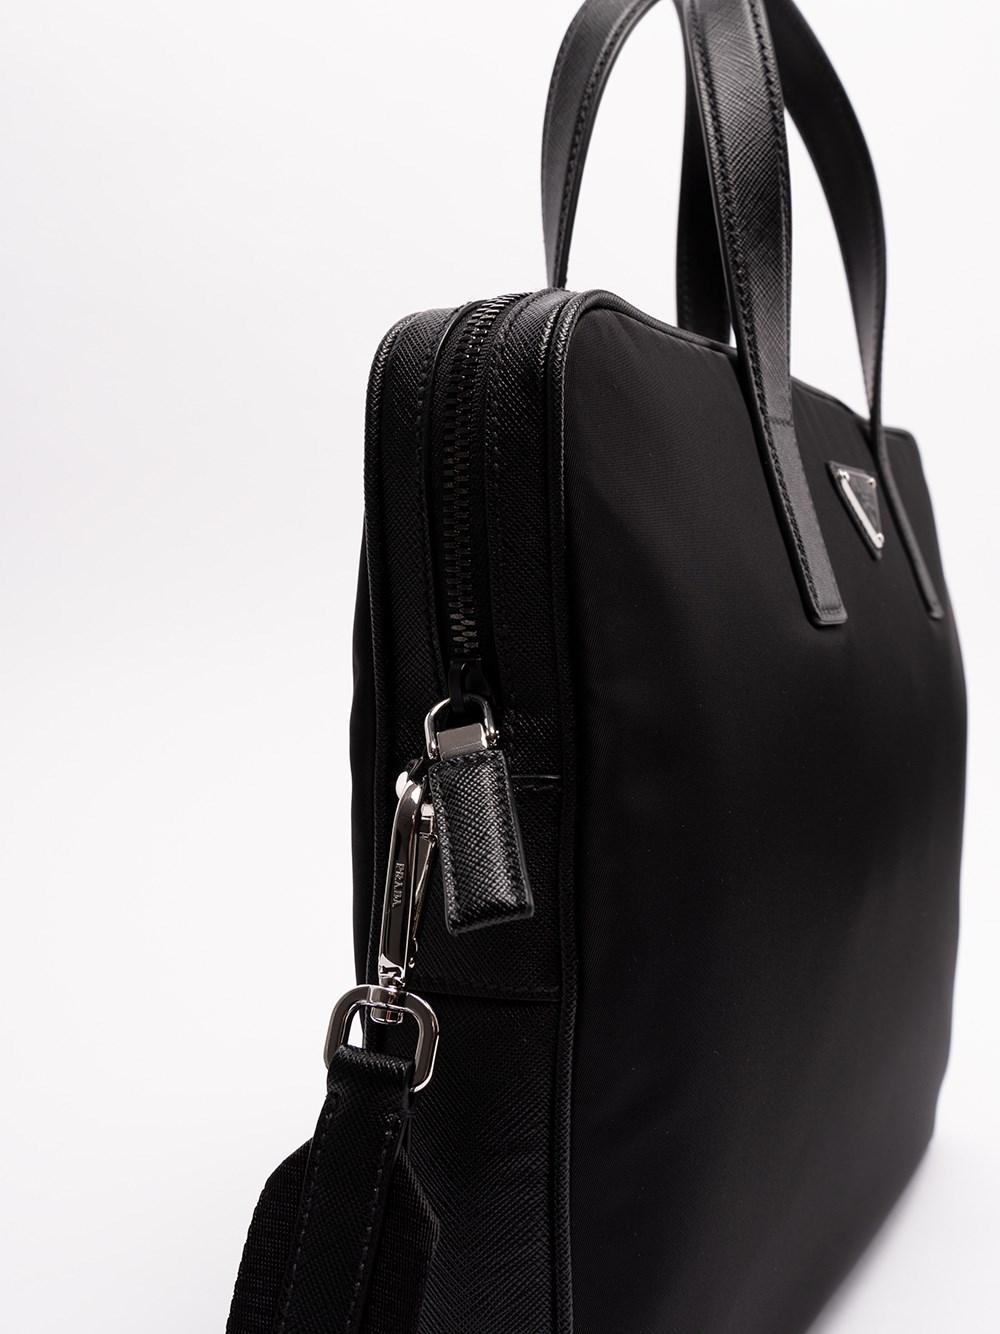 Prada Laptop Bags & Briefcases for Men - Shop Now on FARFETCH